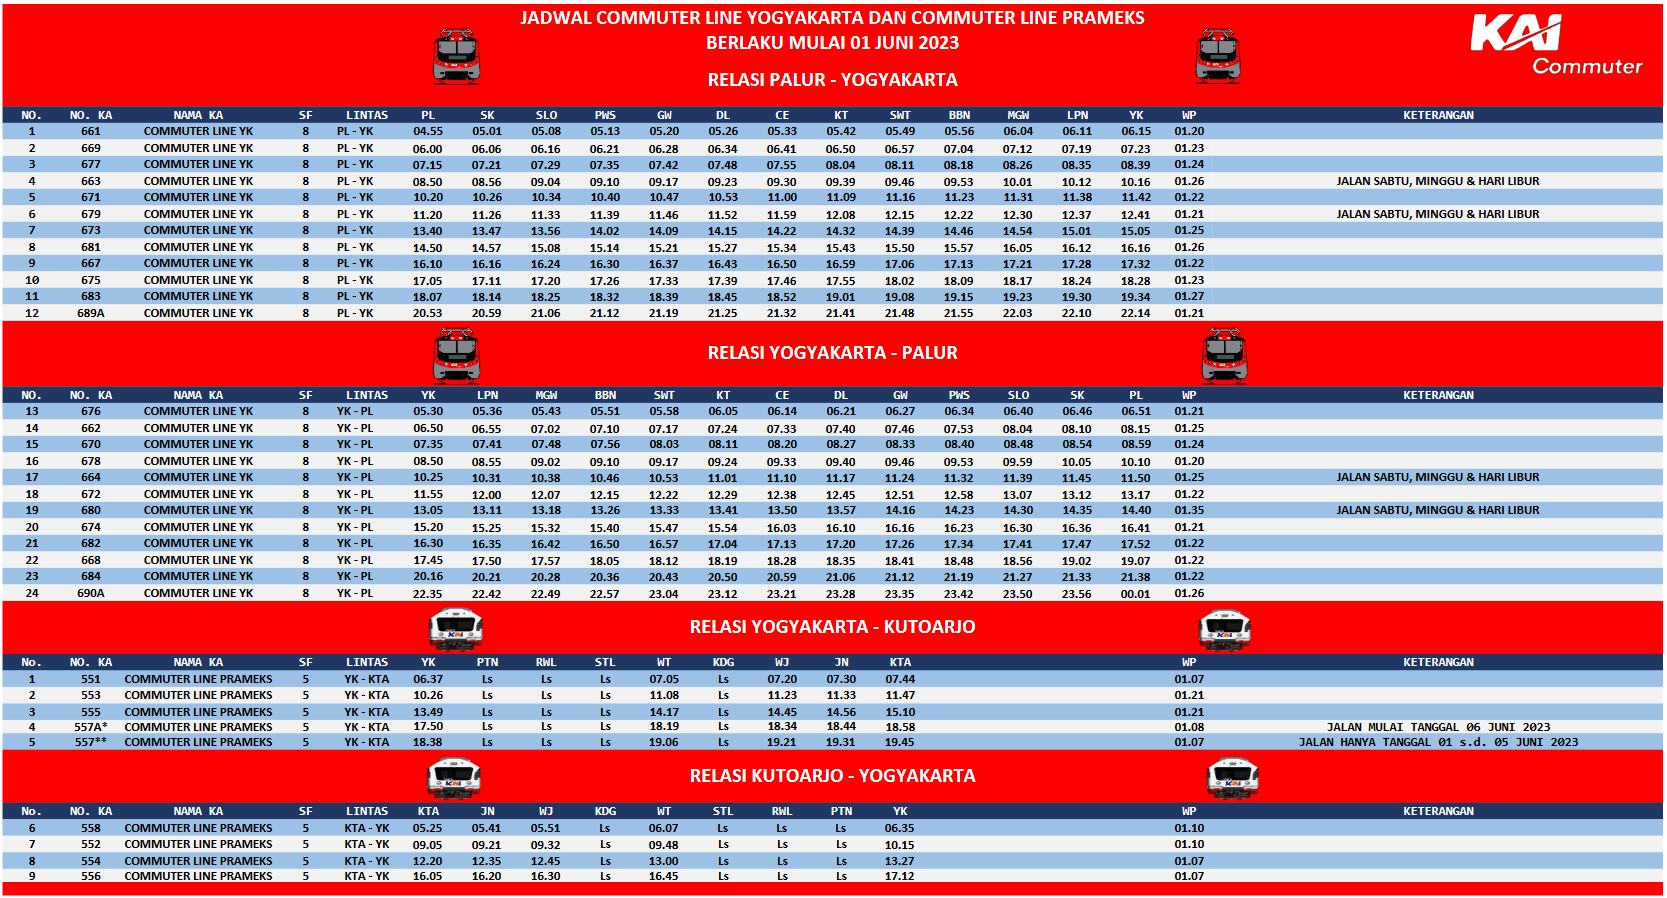 Jadwal commuter line yogyakarta per 1 juni 2023